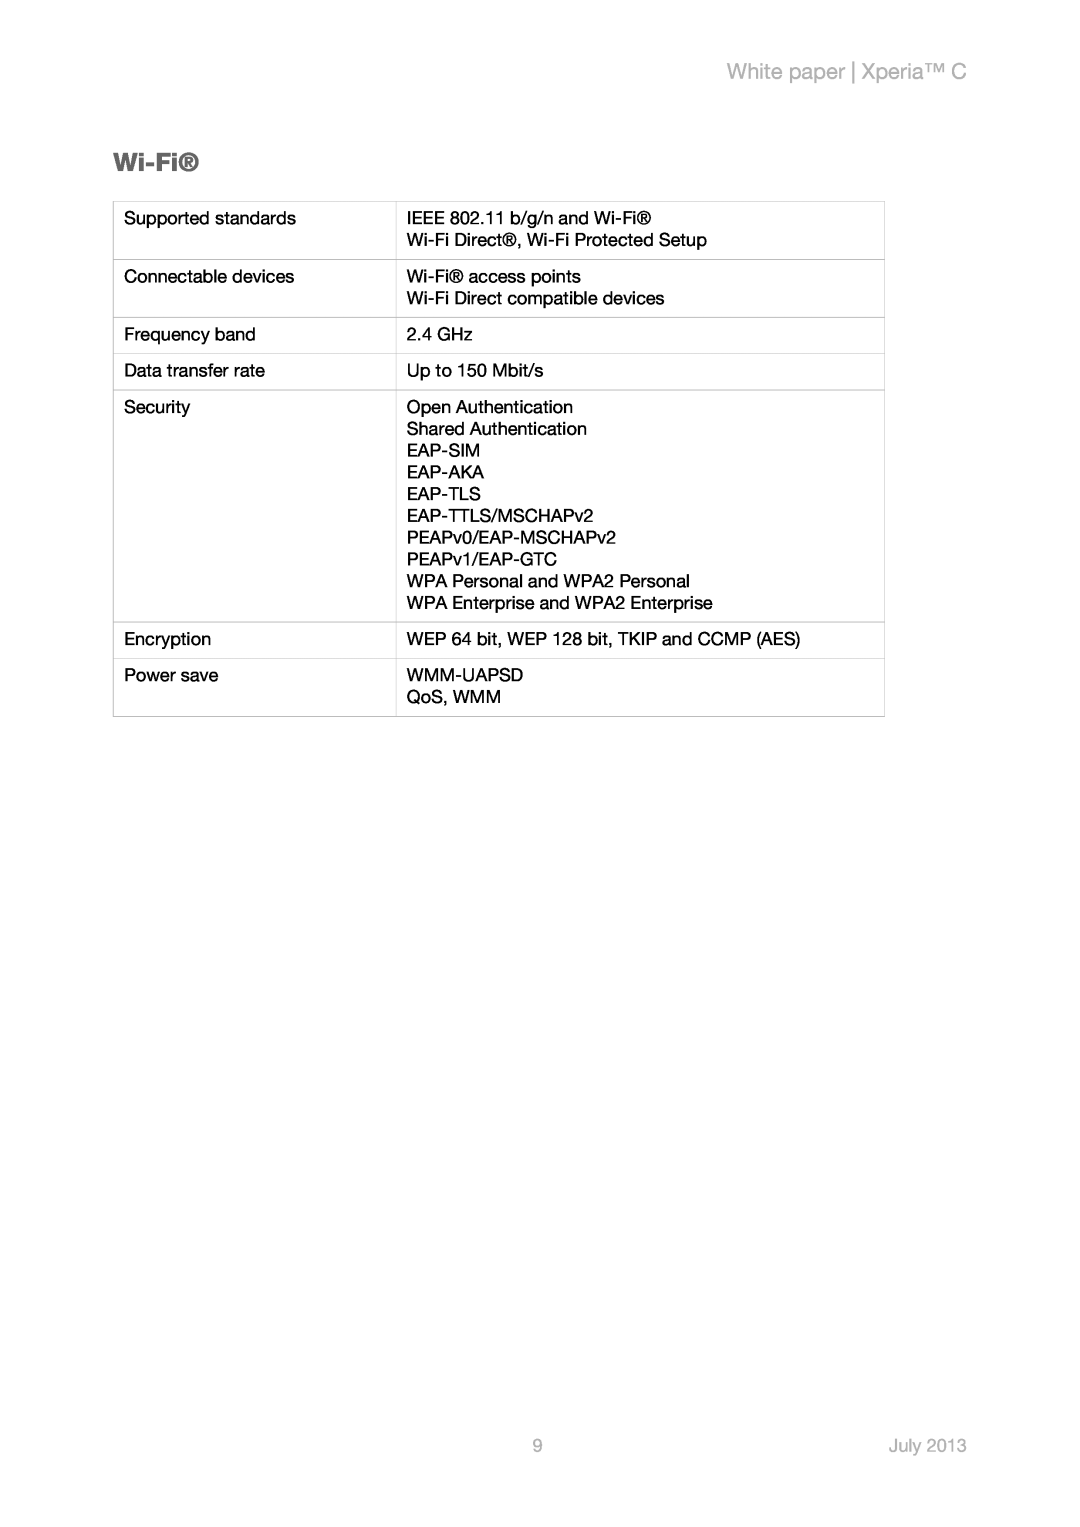 Sony s39h manual Wi-Fi, White paper Xperia C, July 